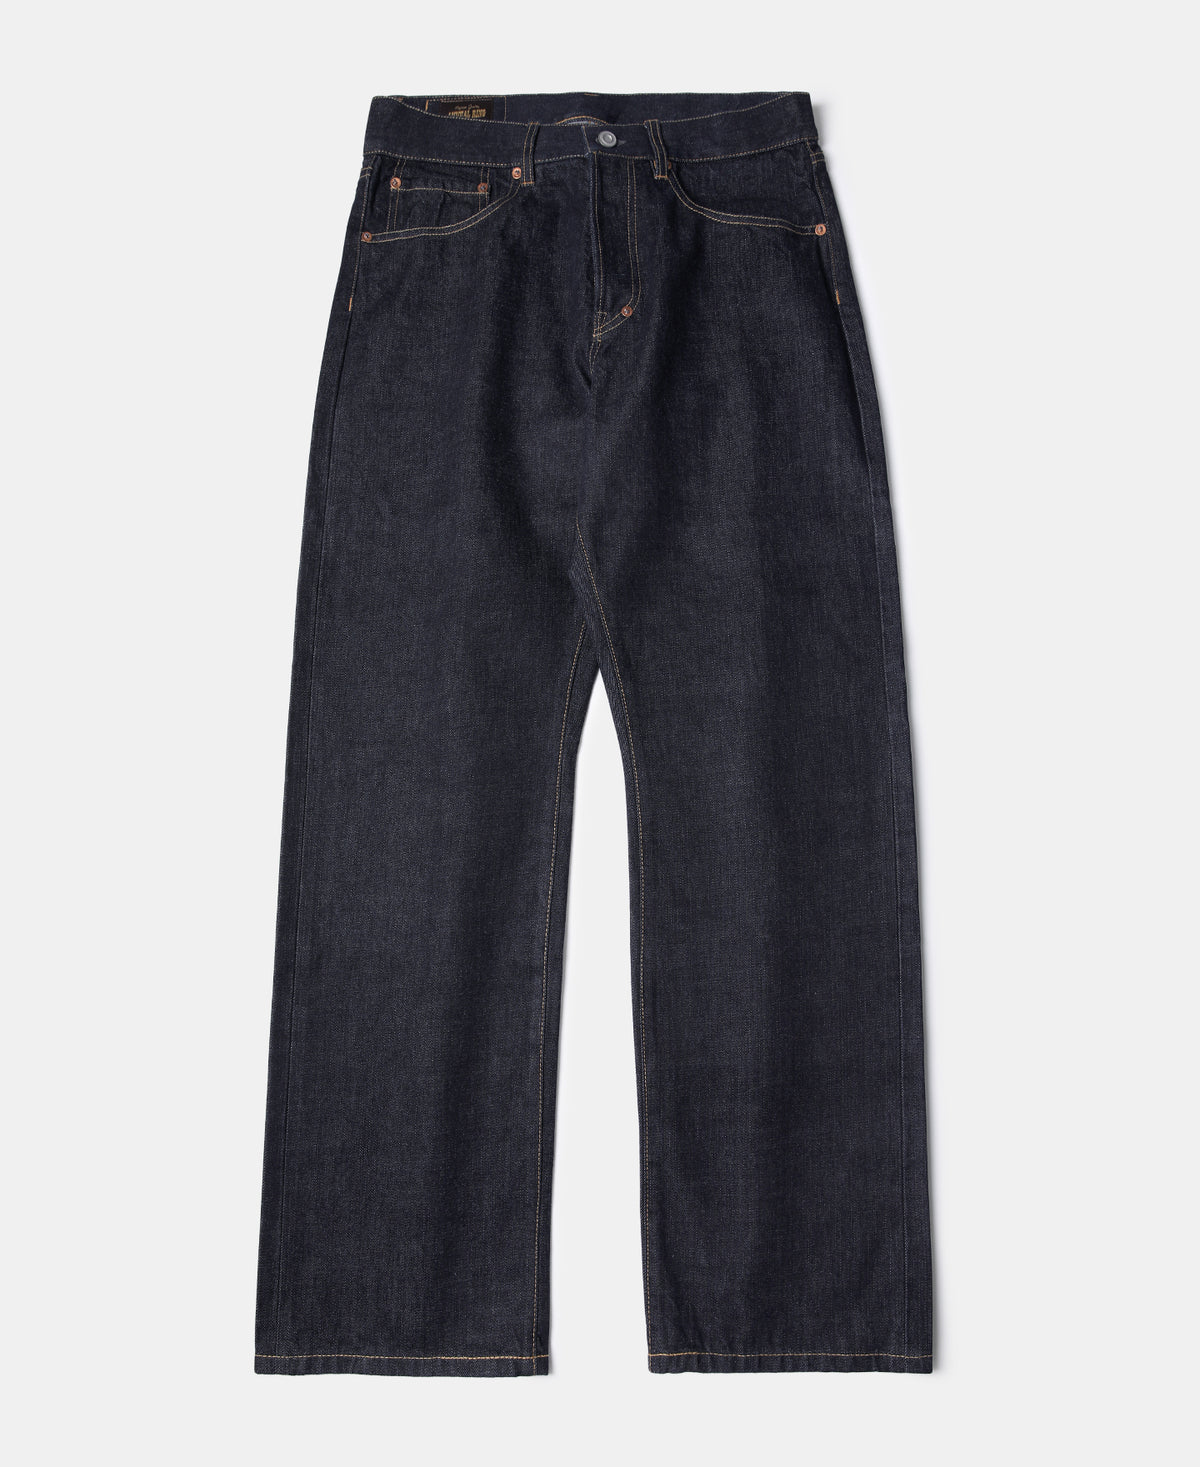 14.5 oz Selvedge Denim Bootcut Jeans